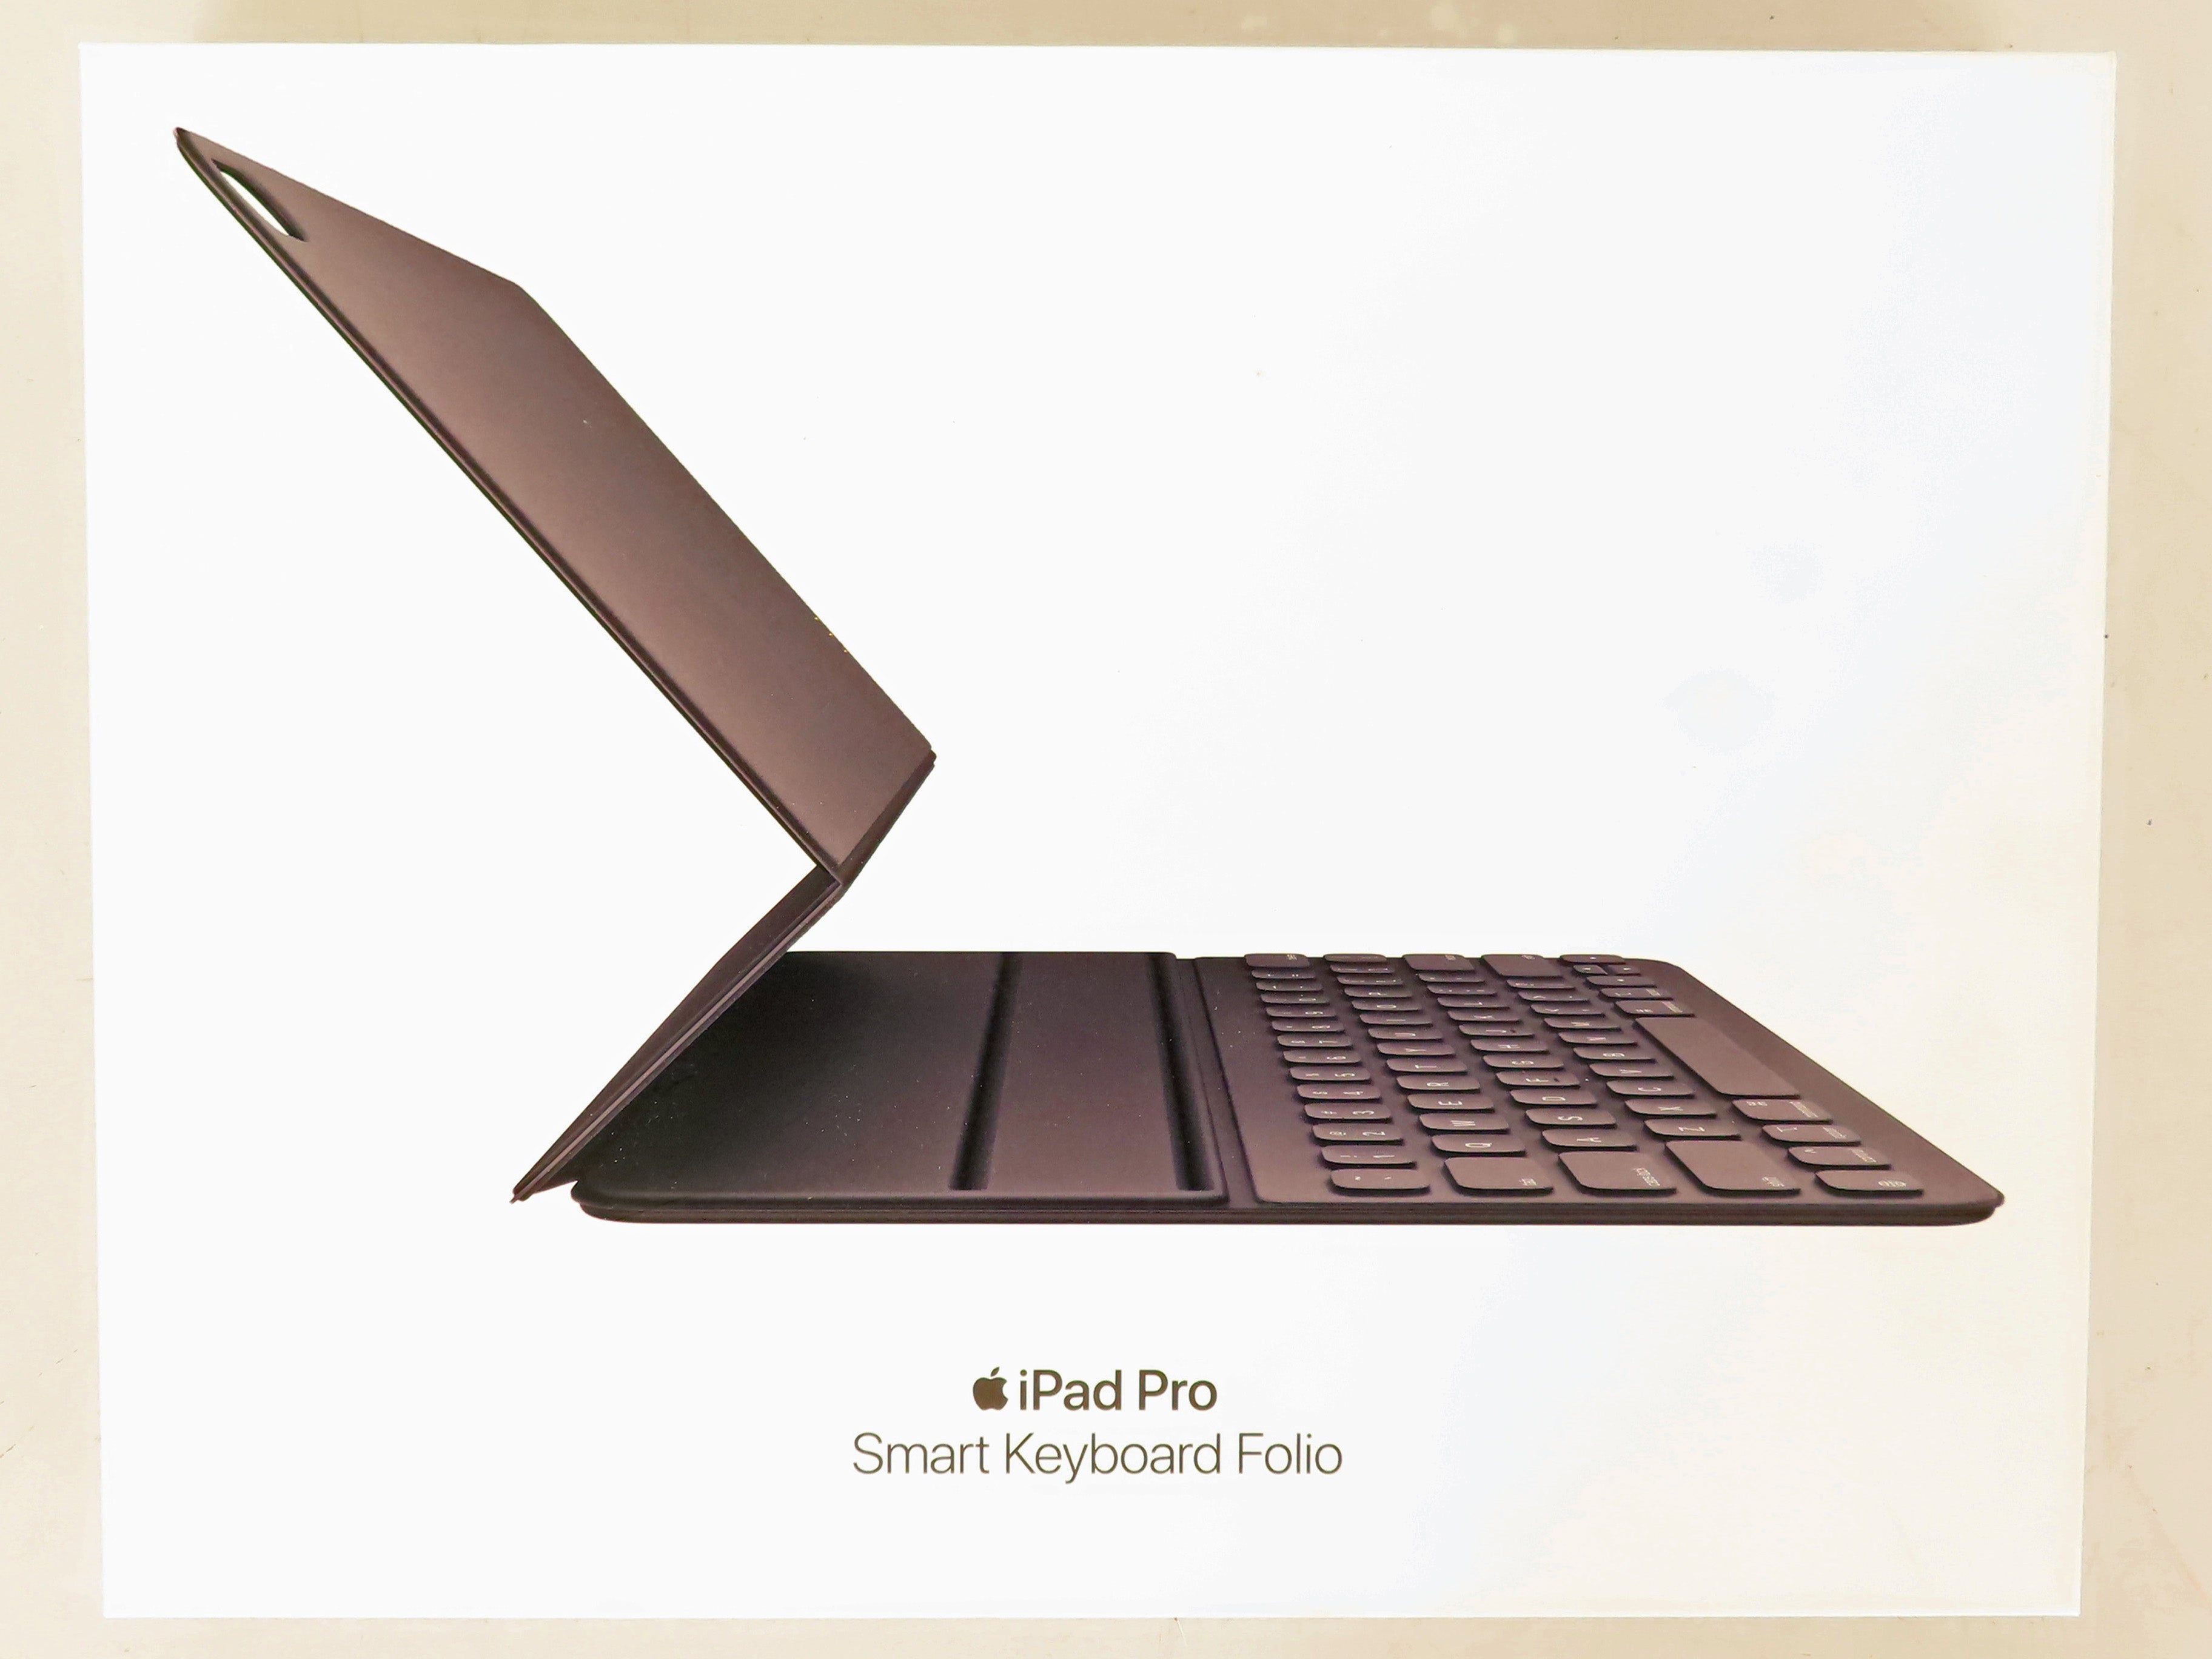 Apple iPad Pro Smart Keyboard Folio *Empty Box Only*